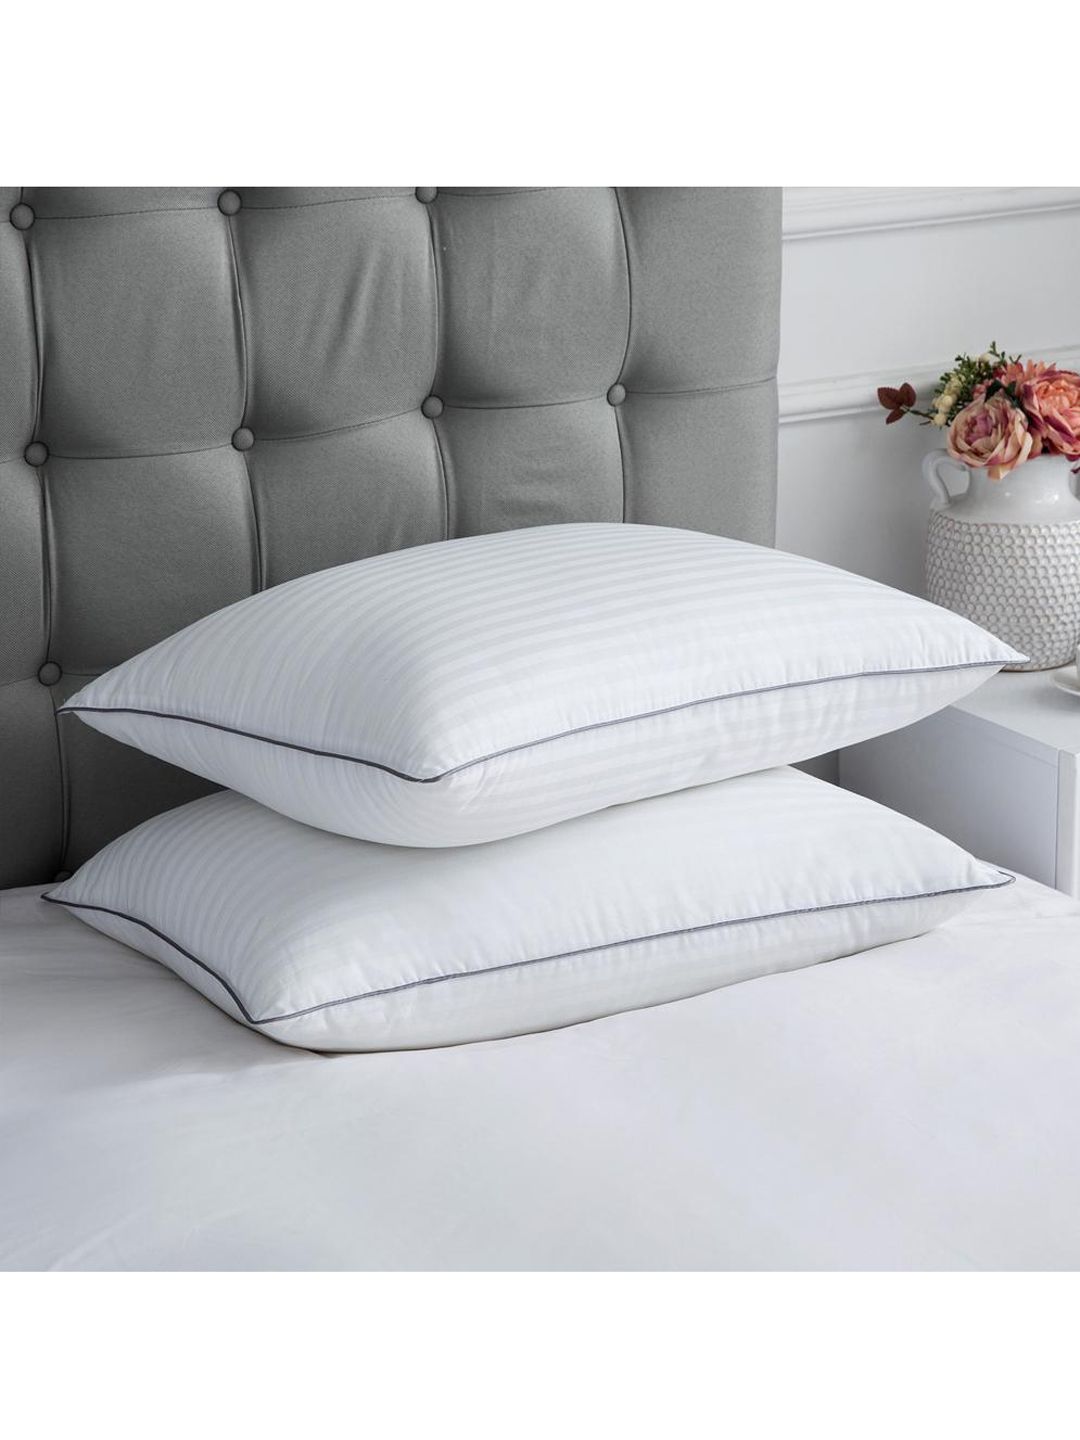 LA VERNE Set of 2 White Striped Rectangular Sleeping Pillow Price in India